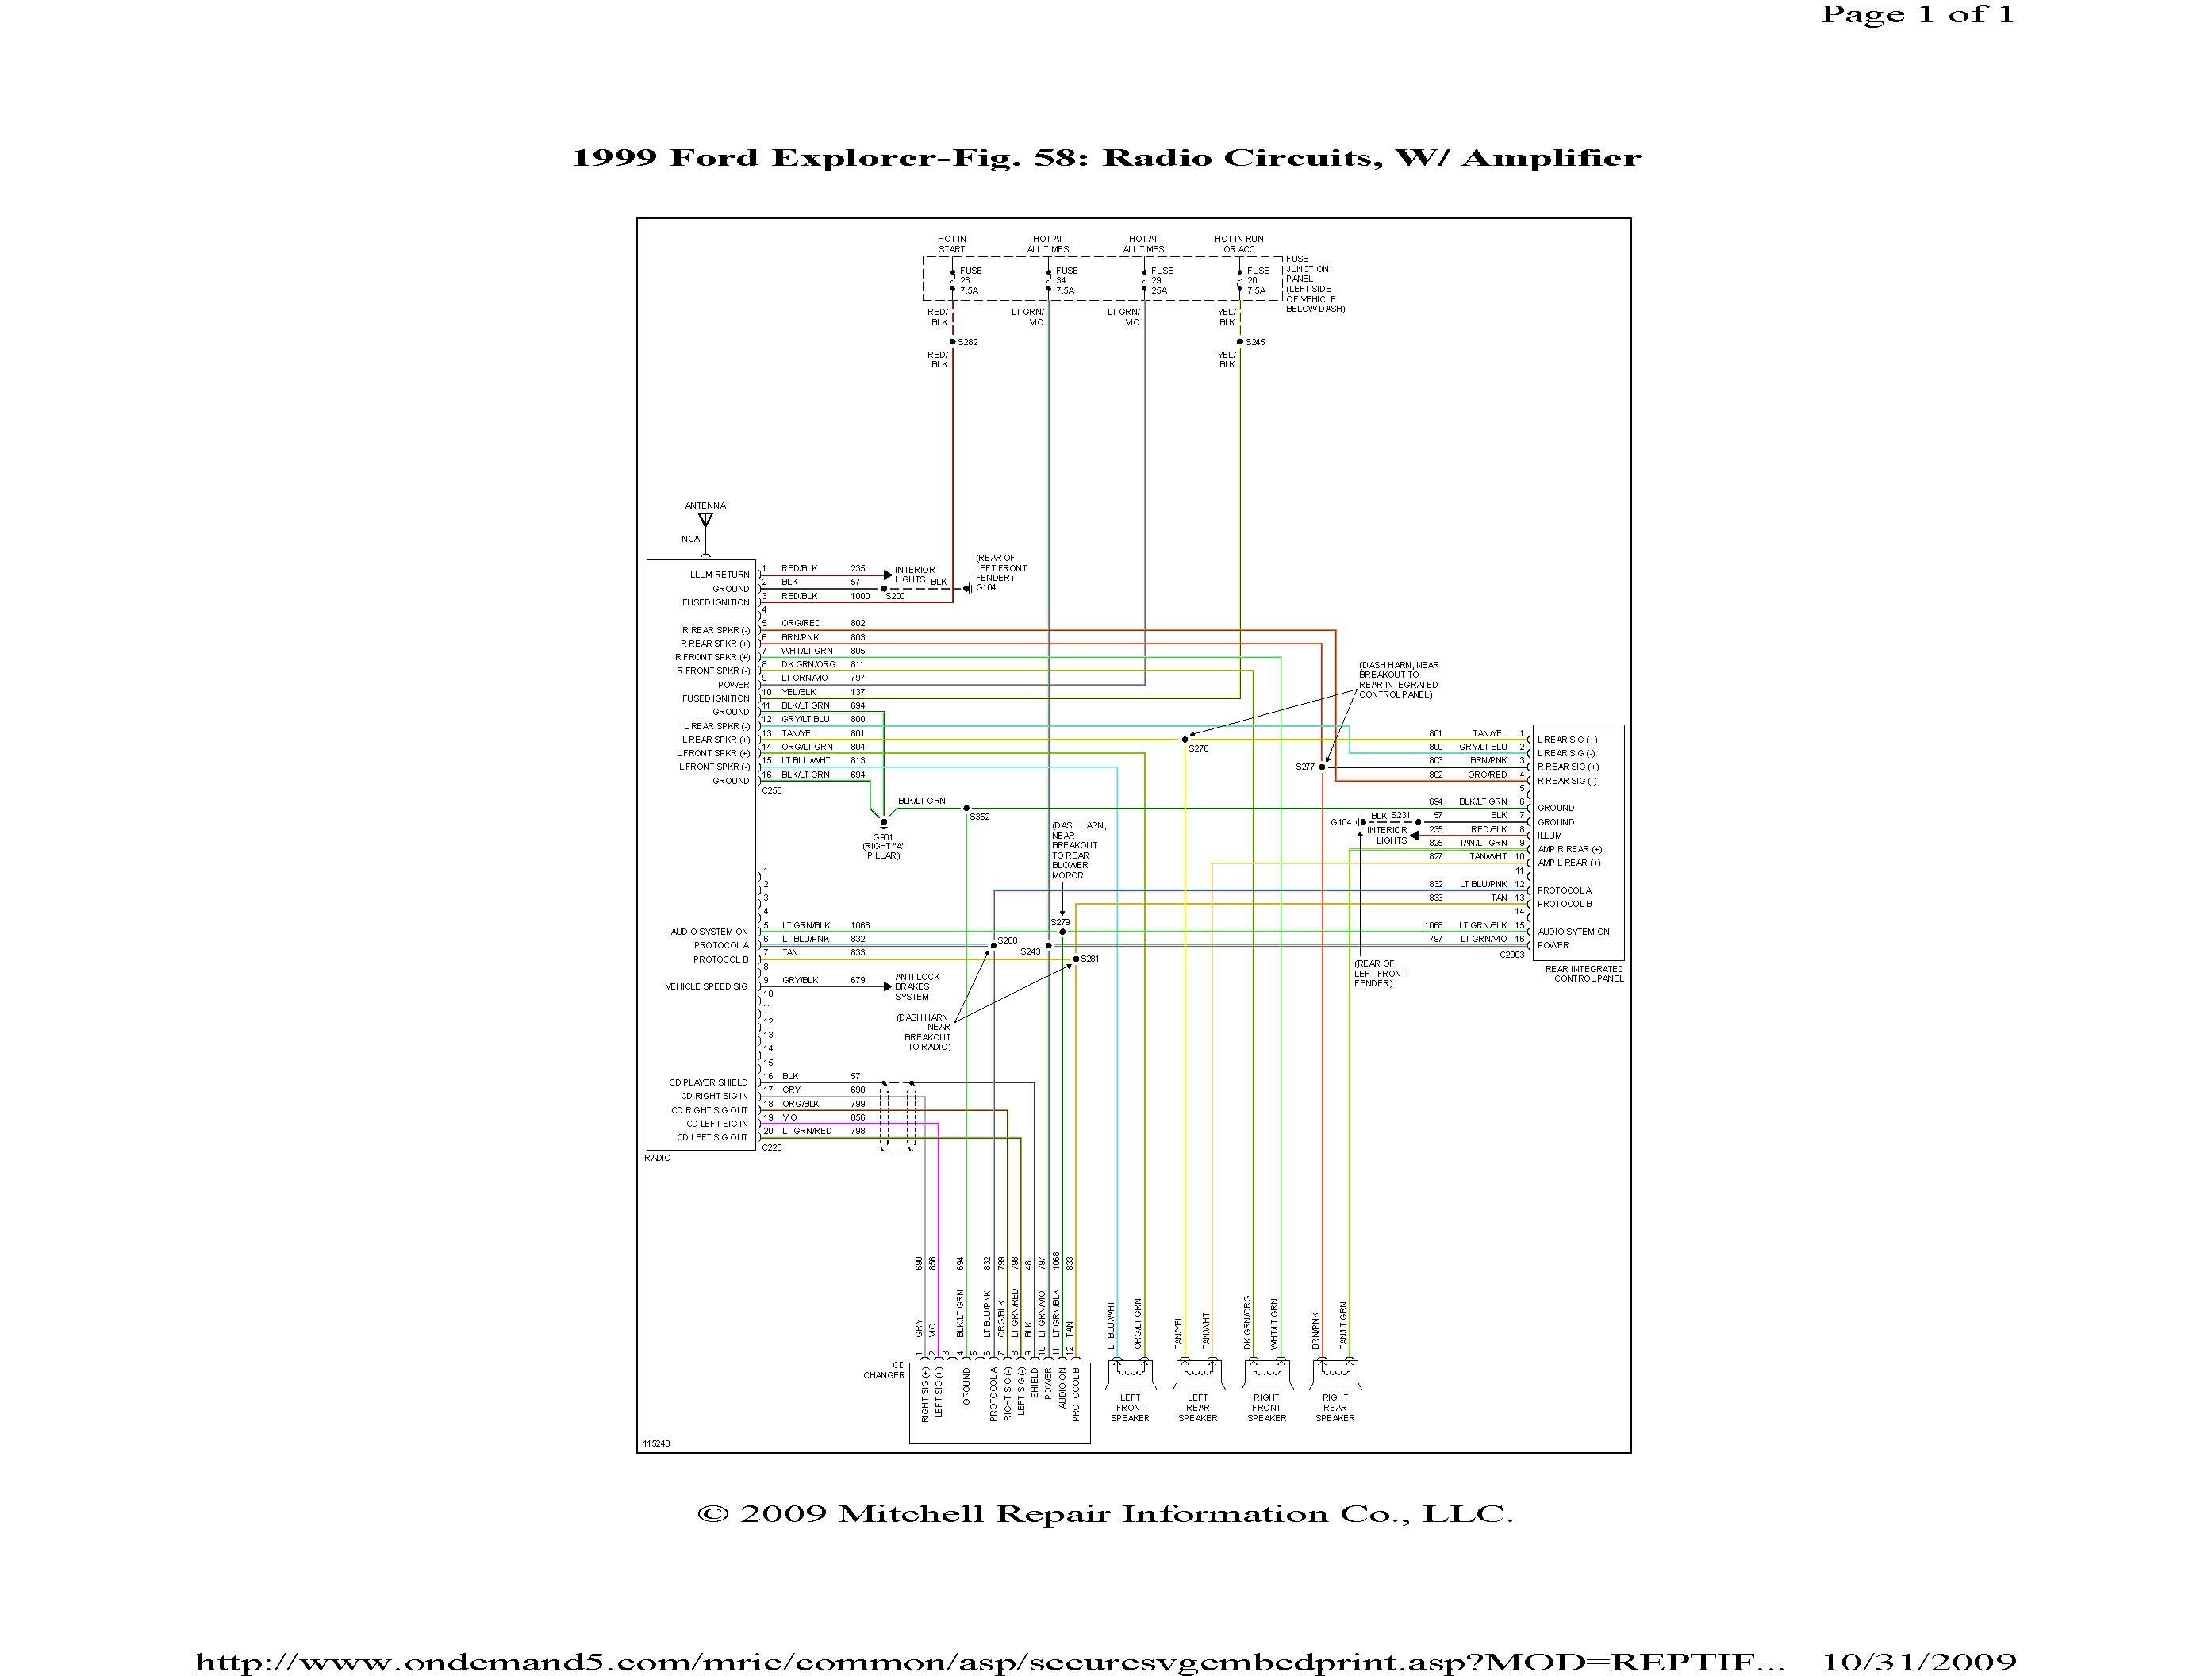 Ford Explorer Parts Diagram 2004 Explorer Wiring Diagram Wiring Data Of Ford Explorer Parts Diagram